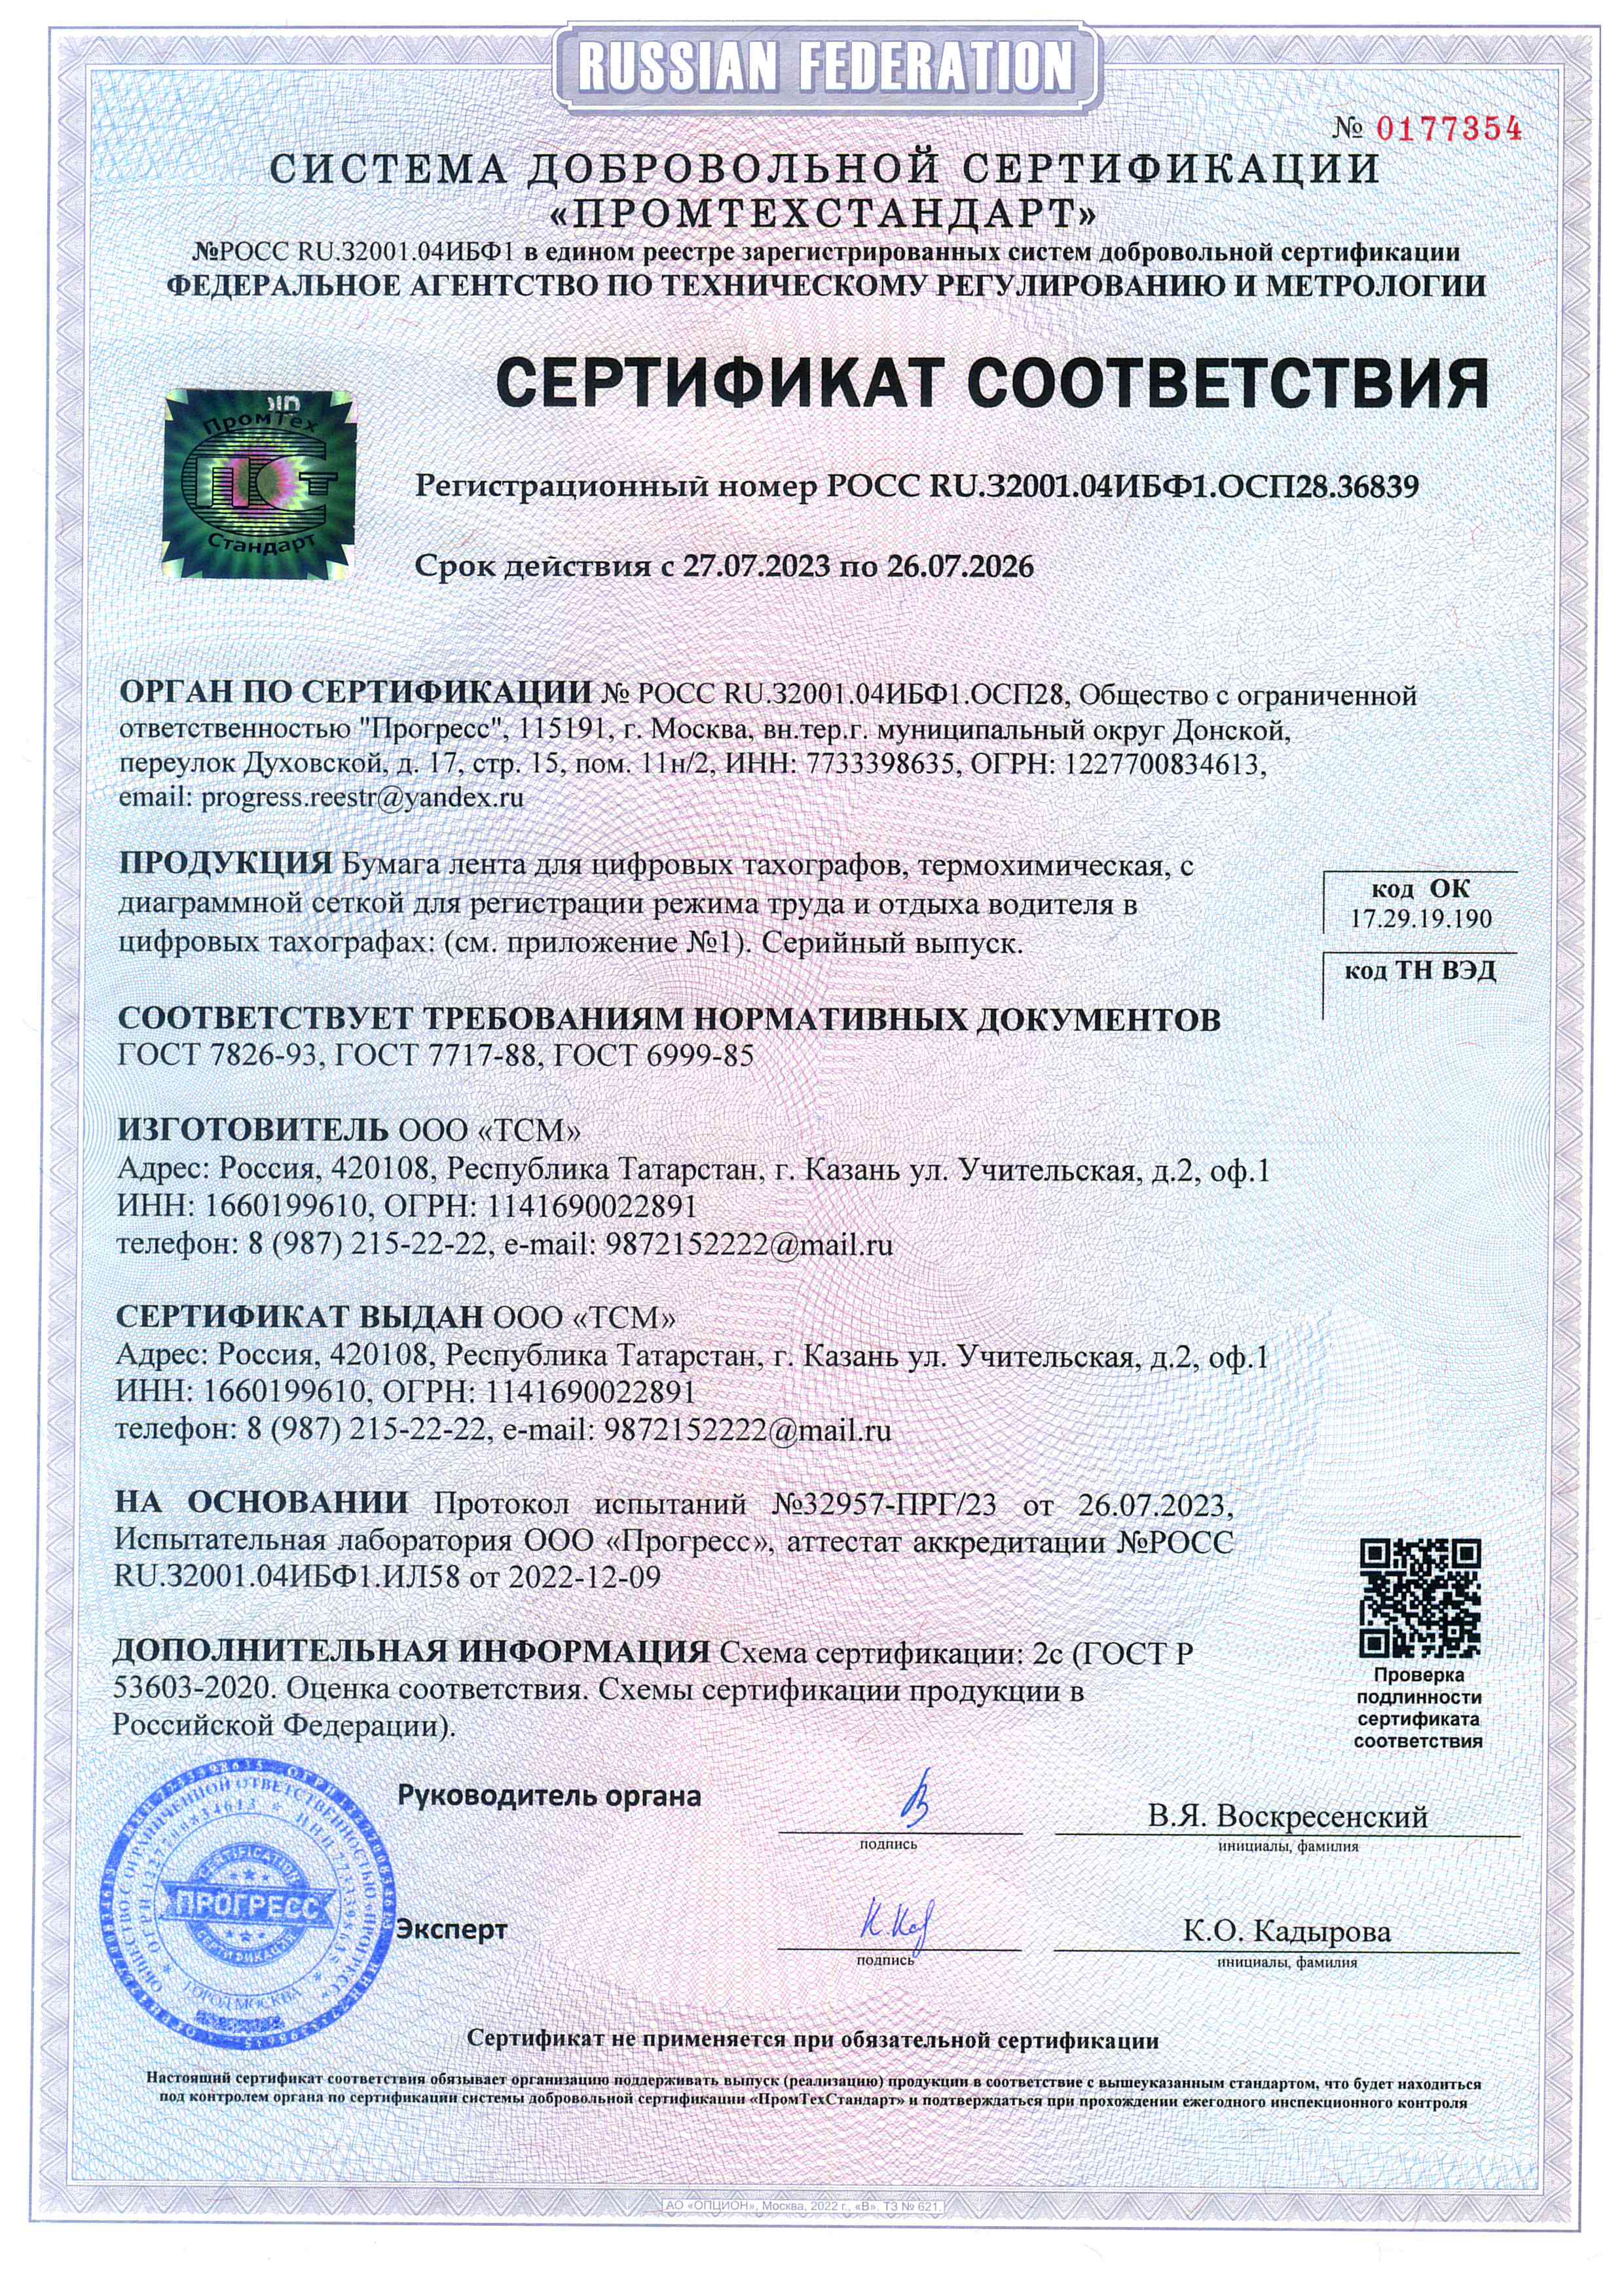 Лента для тахографа - сертификат соотвествия